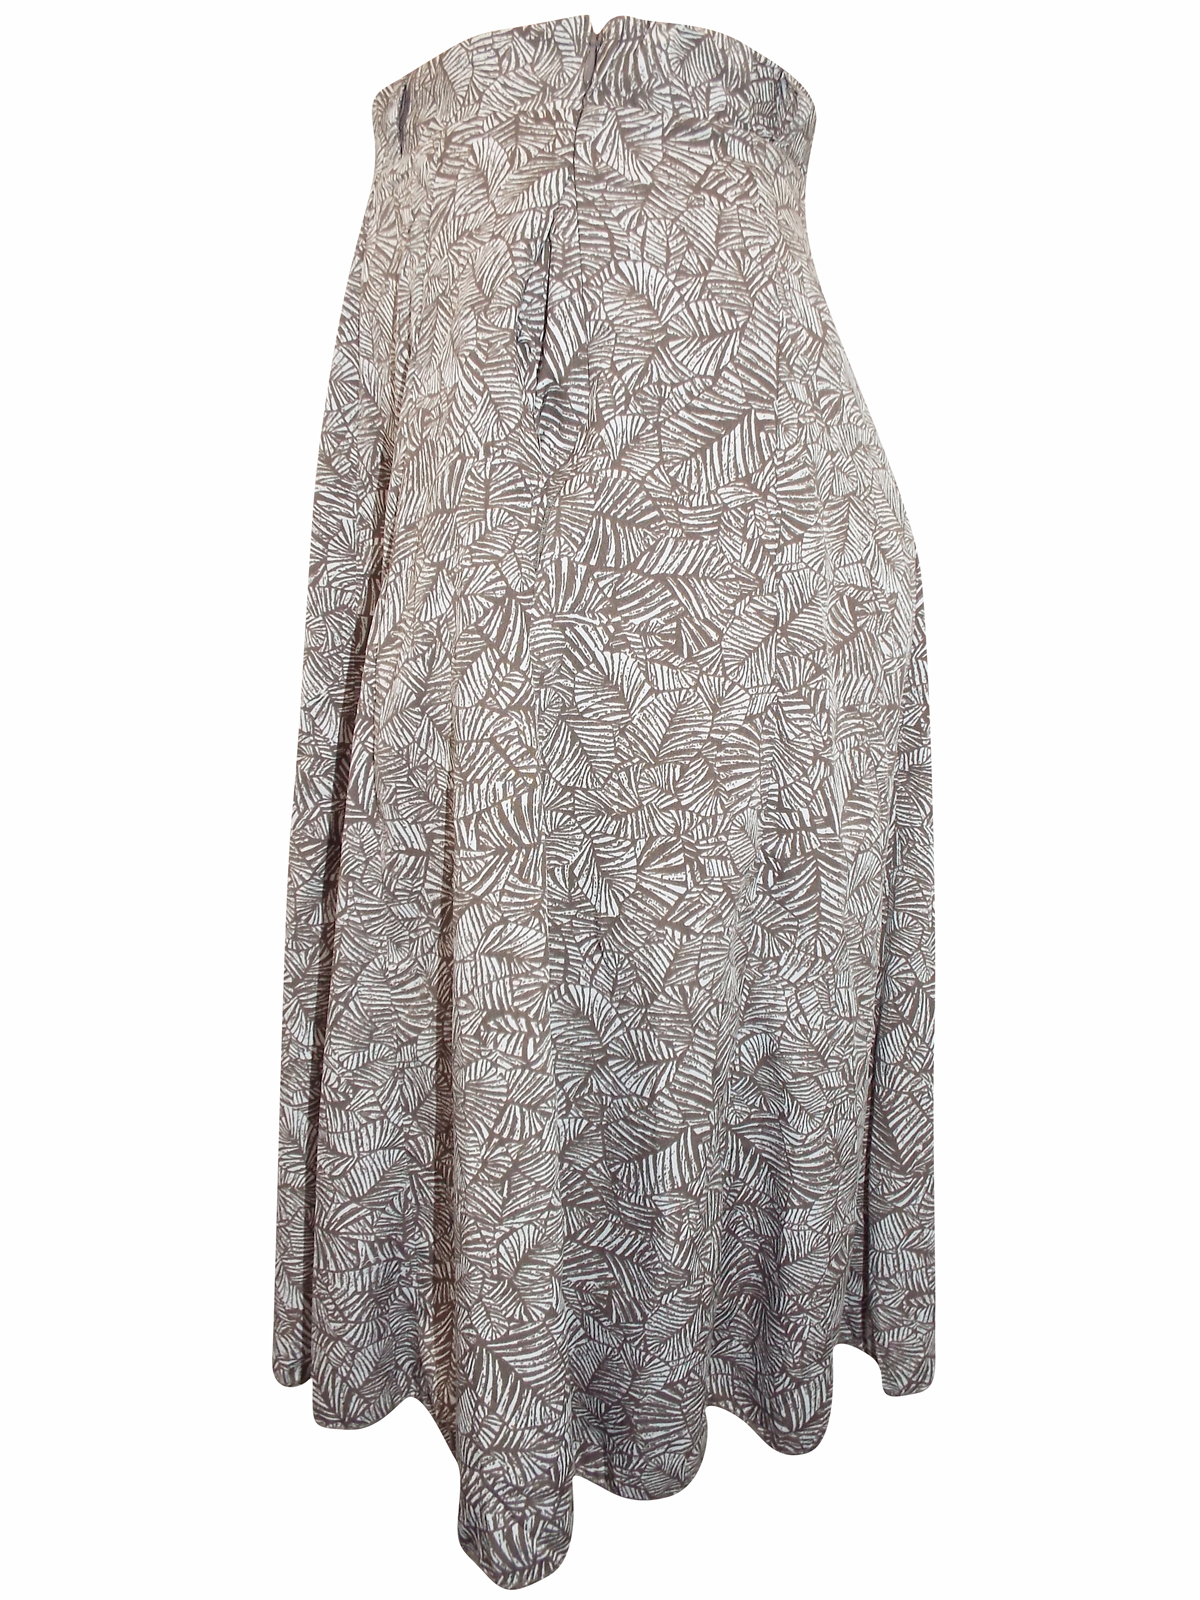 Damart - - Damart BROWN Foliage Print Flared Skirt - Size 8 to 24